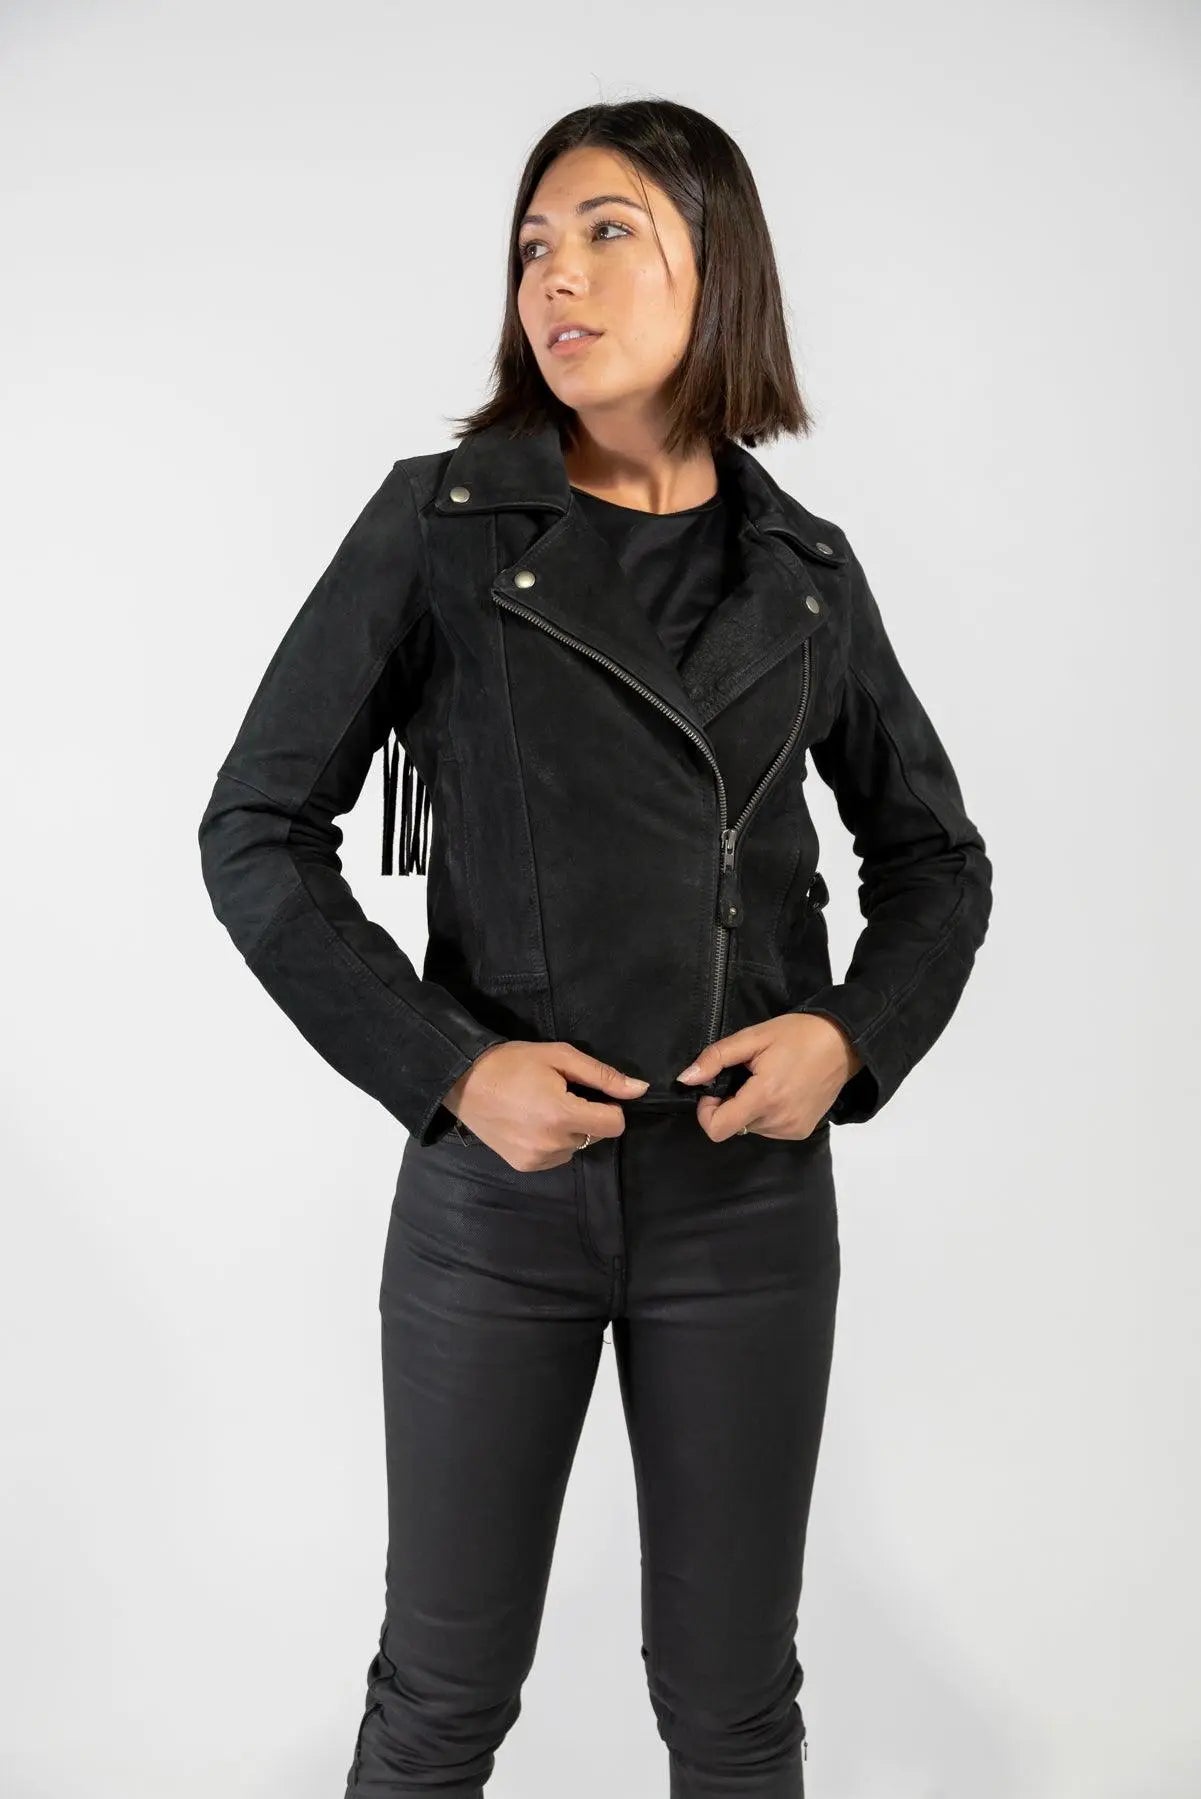 LMSXCT Women's Cropped Leather Jackets, Faux Motorcycle Plus Size Moto Biker  Coat Short Lightweight Vegan Pleather Fashion at Amazon Women's Coats Shop